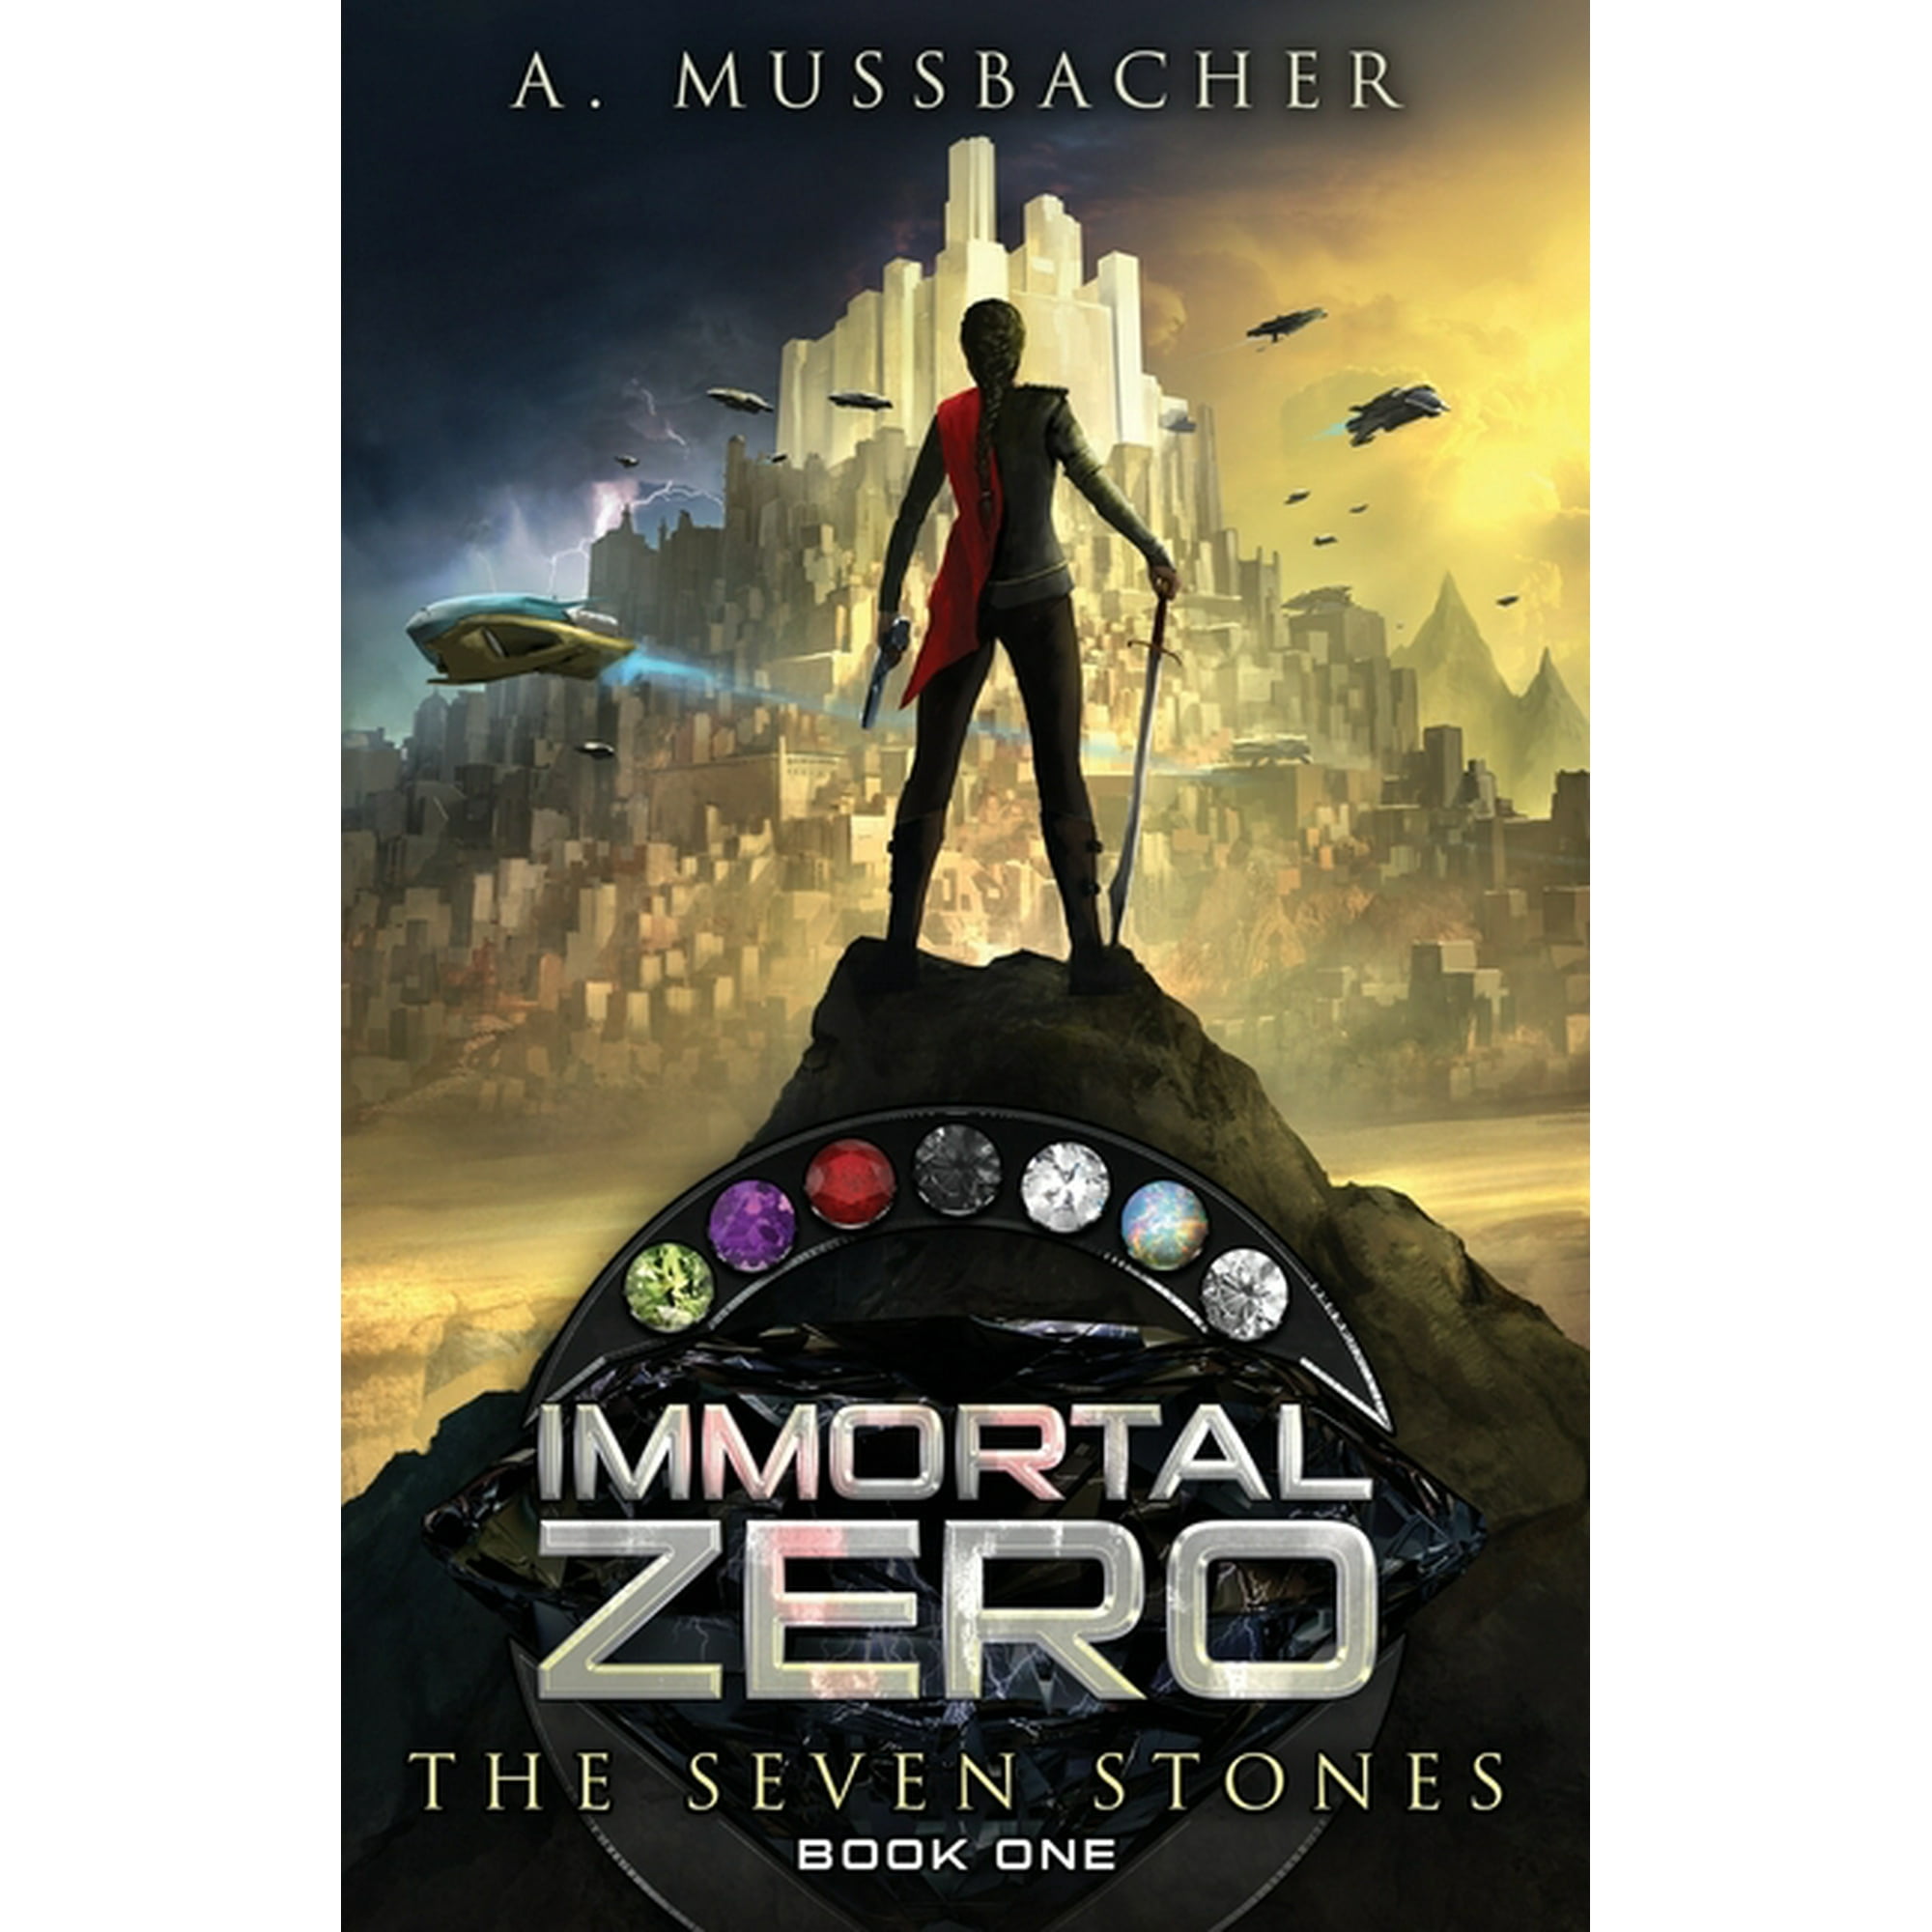 Immortal Game Book Series